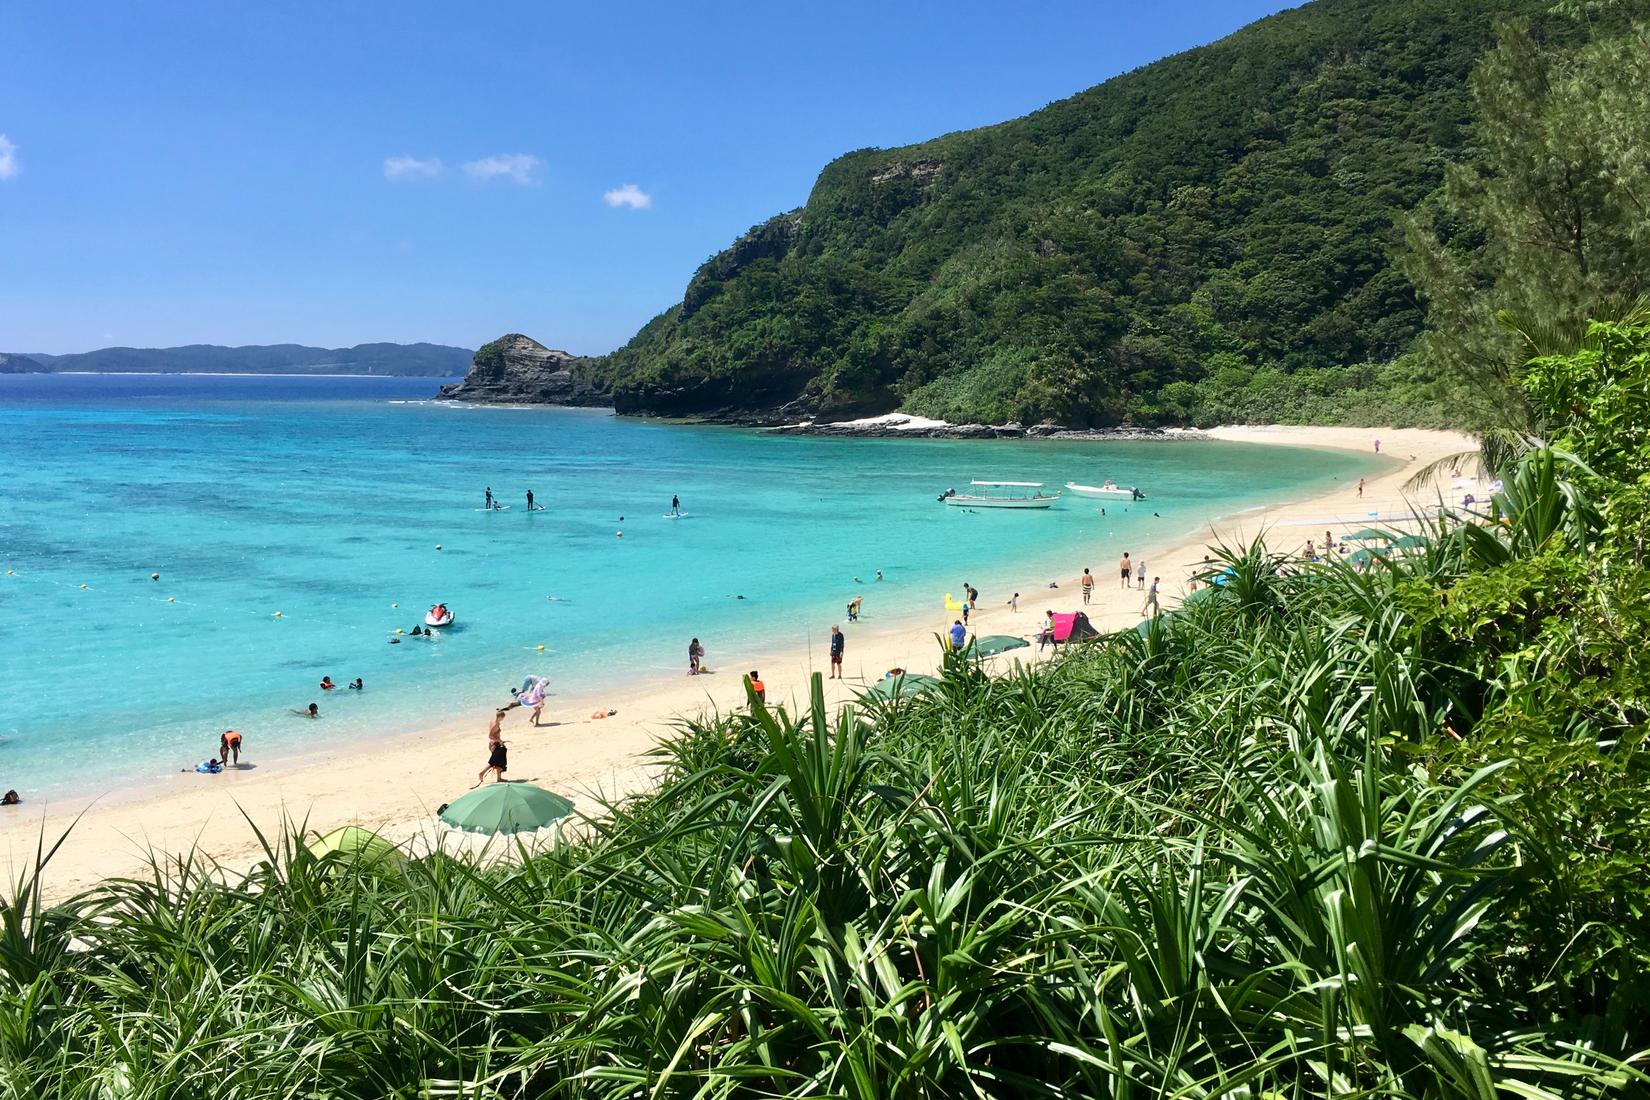 Sandee - Tokashiku Beach